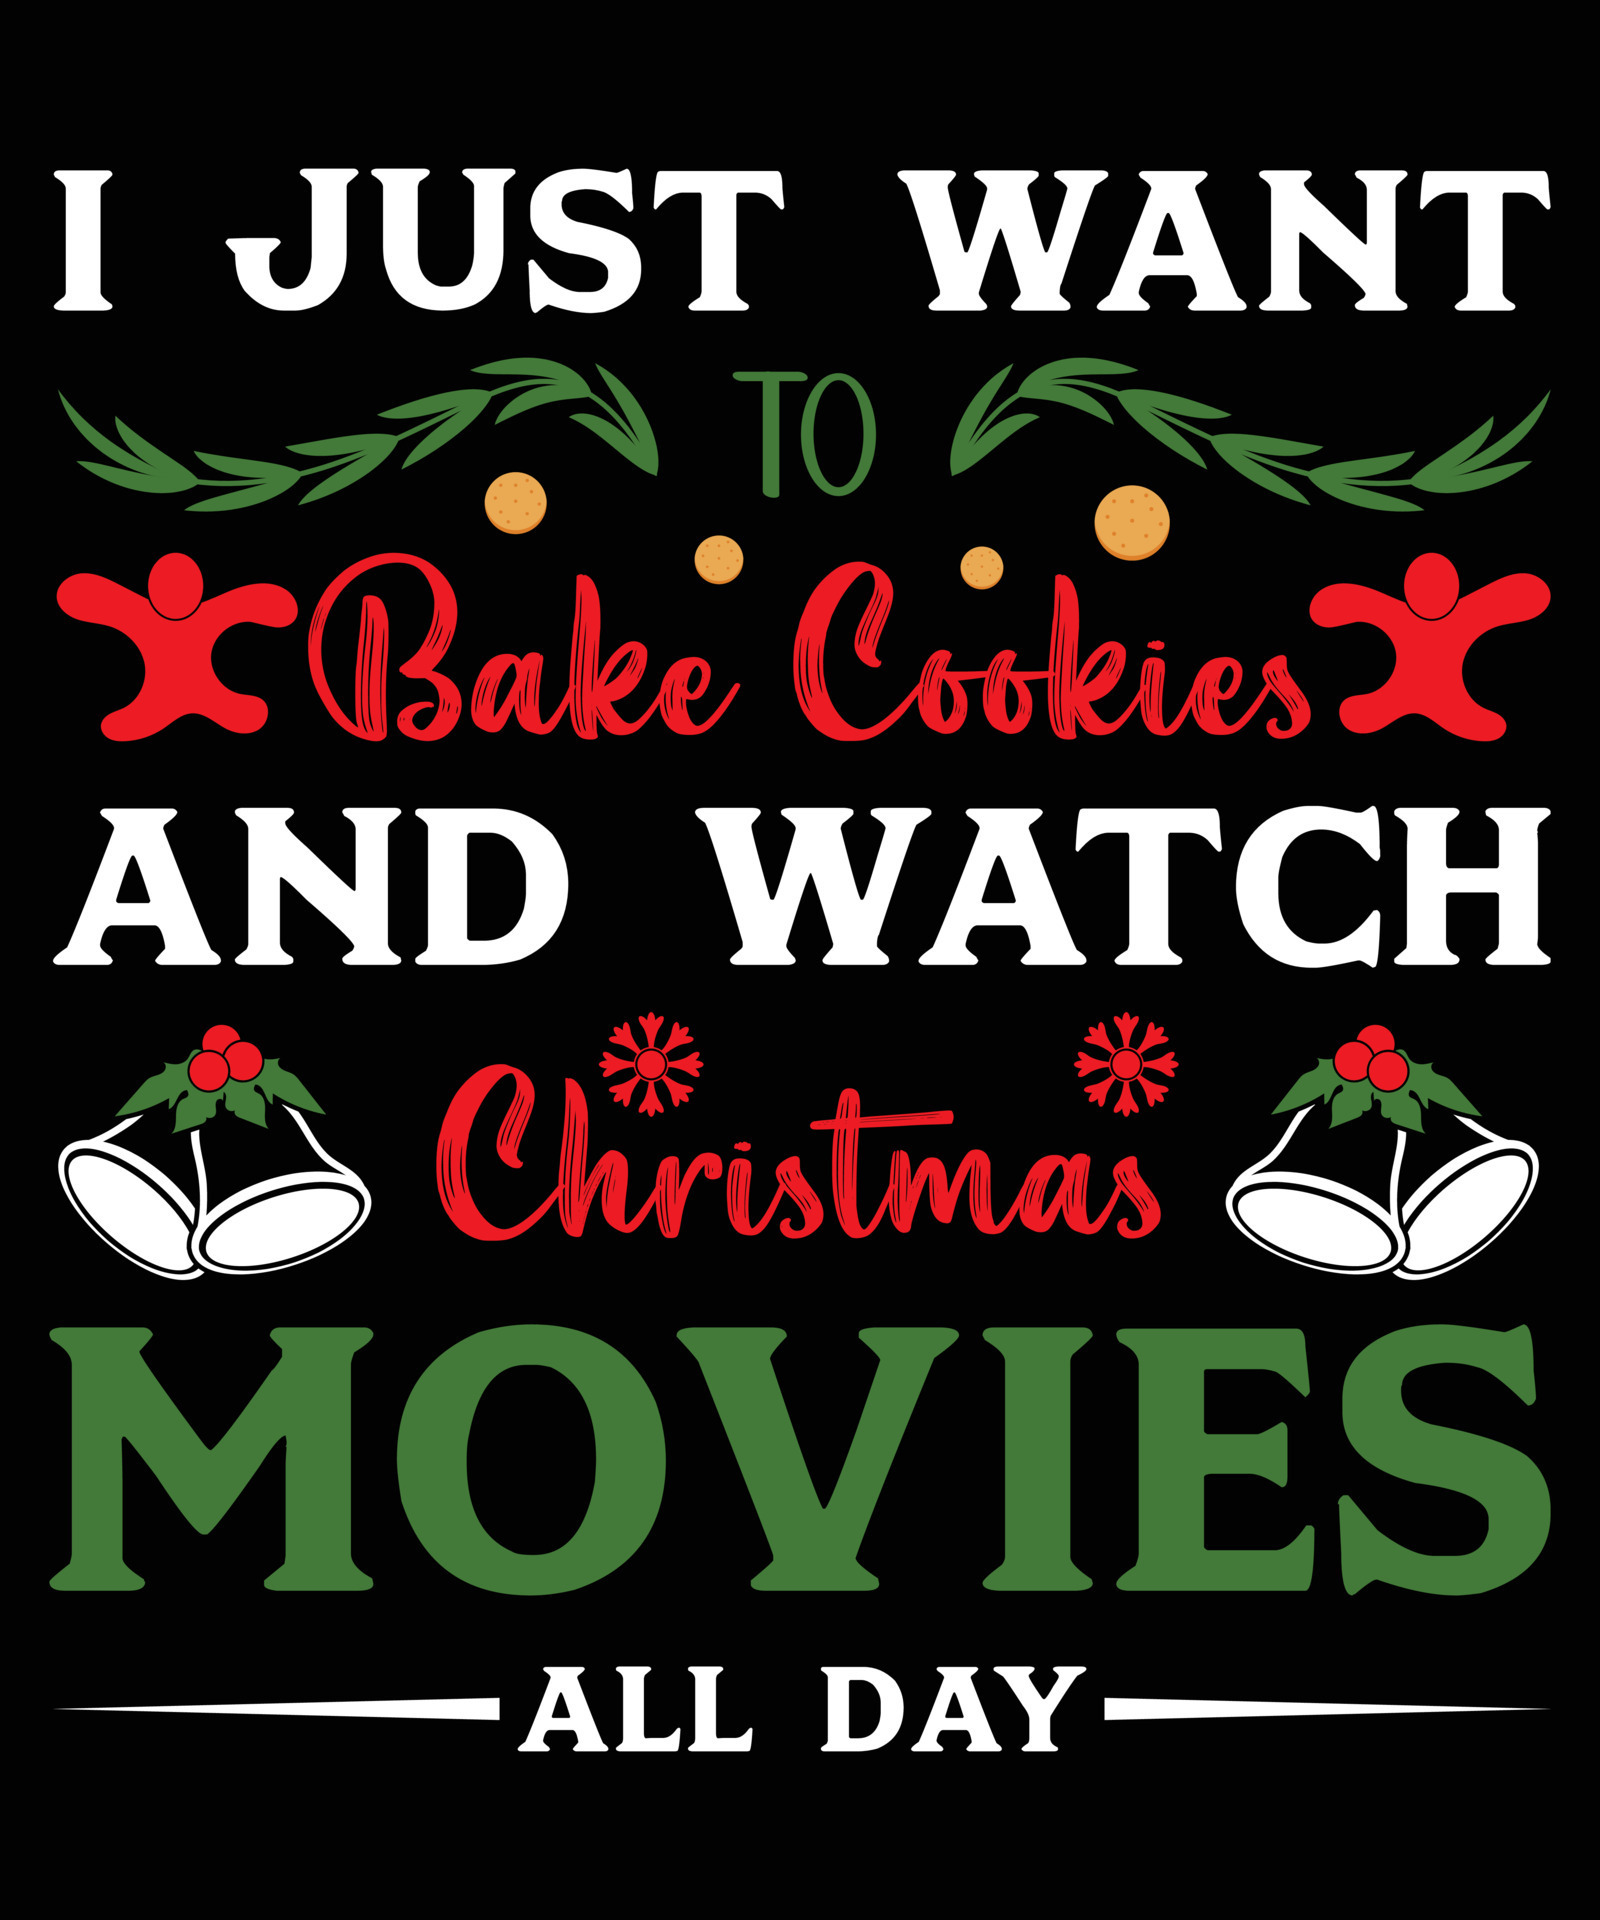 eu só quero assar biscoitos e assistir filmes de natal o dia todo design de  camiseta 11250047 Vetor no Vecteezy